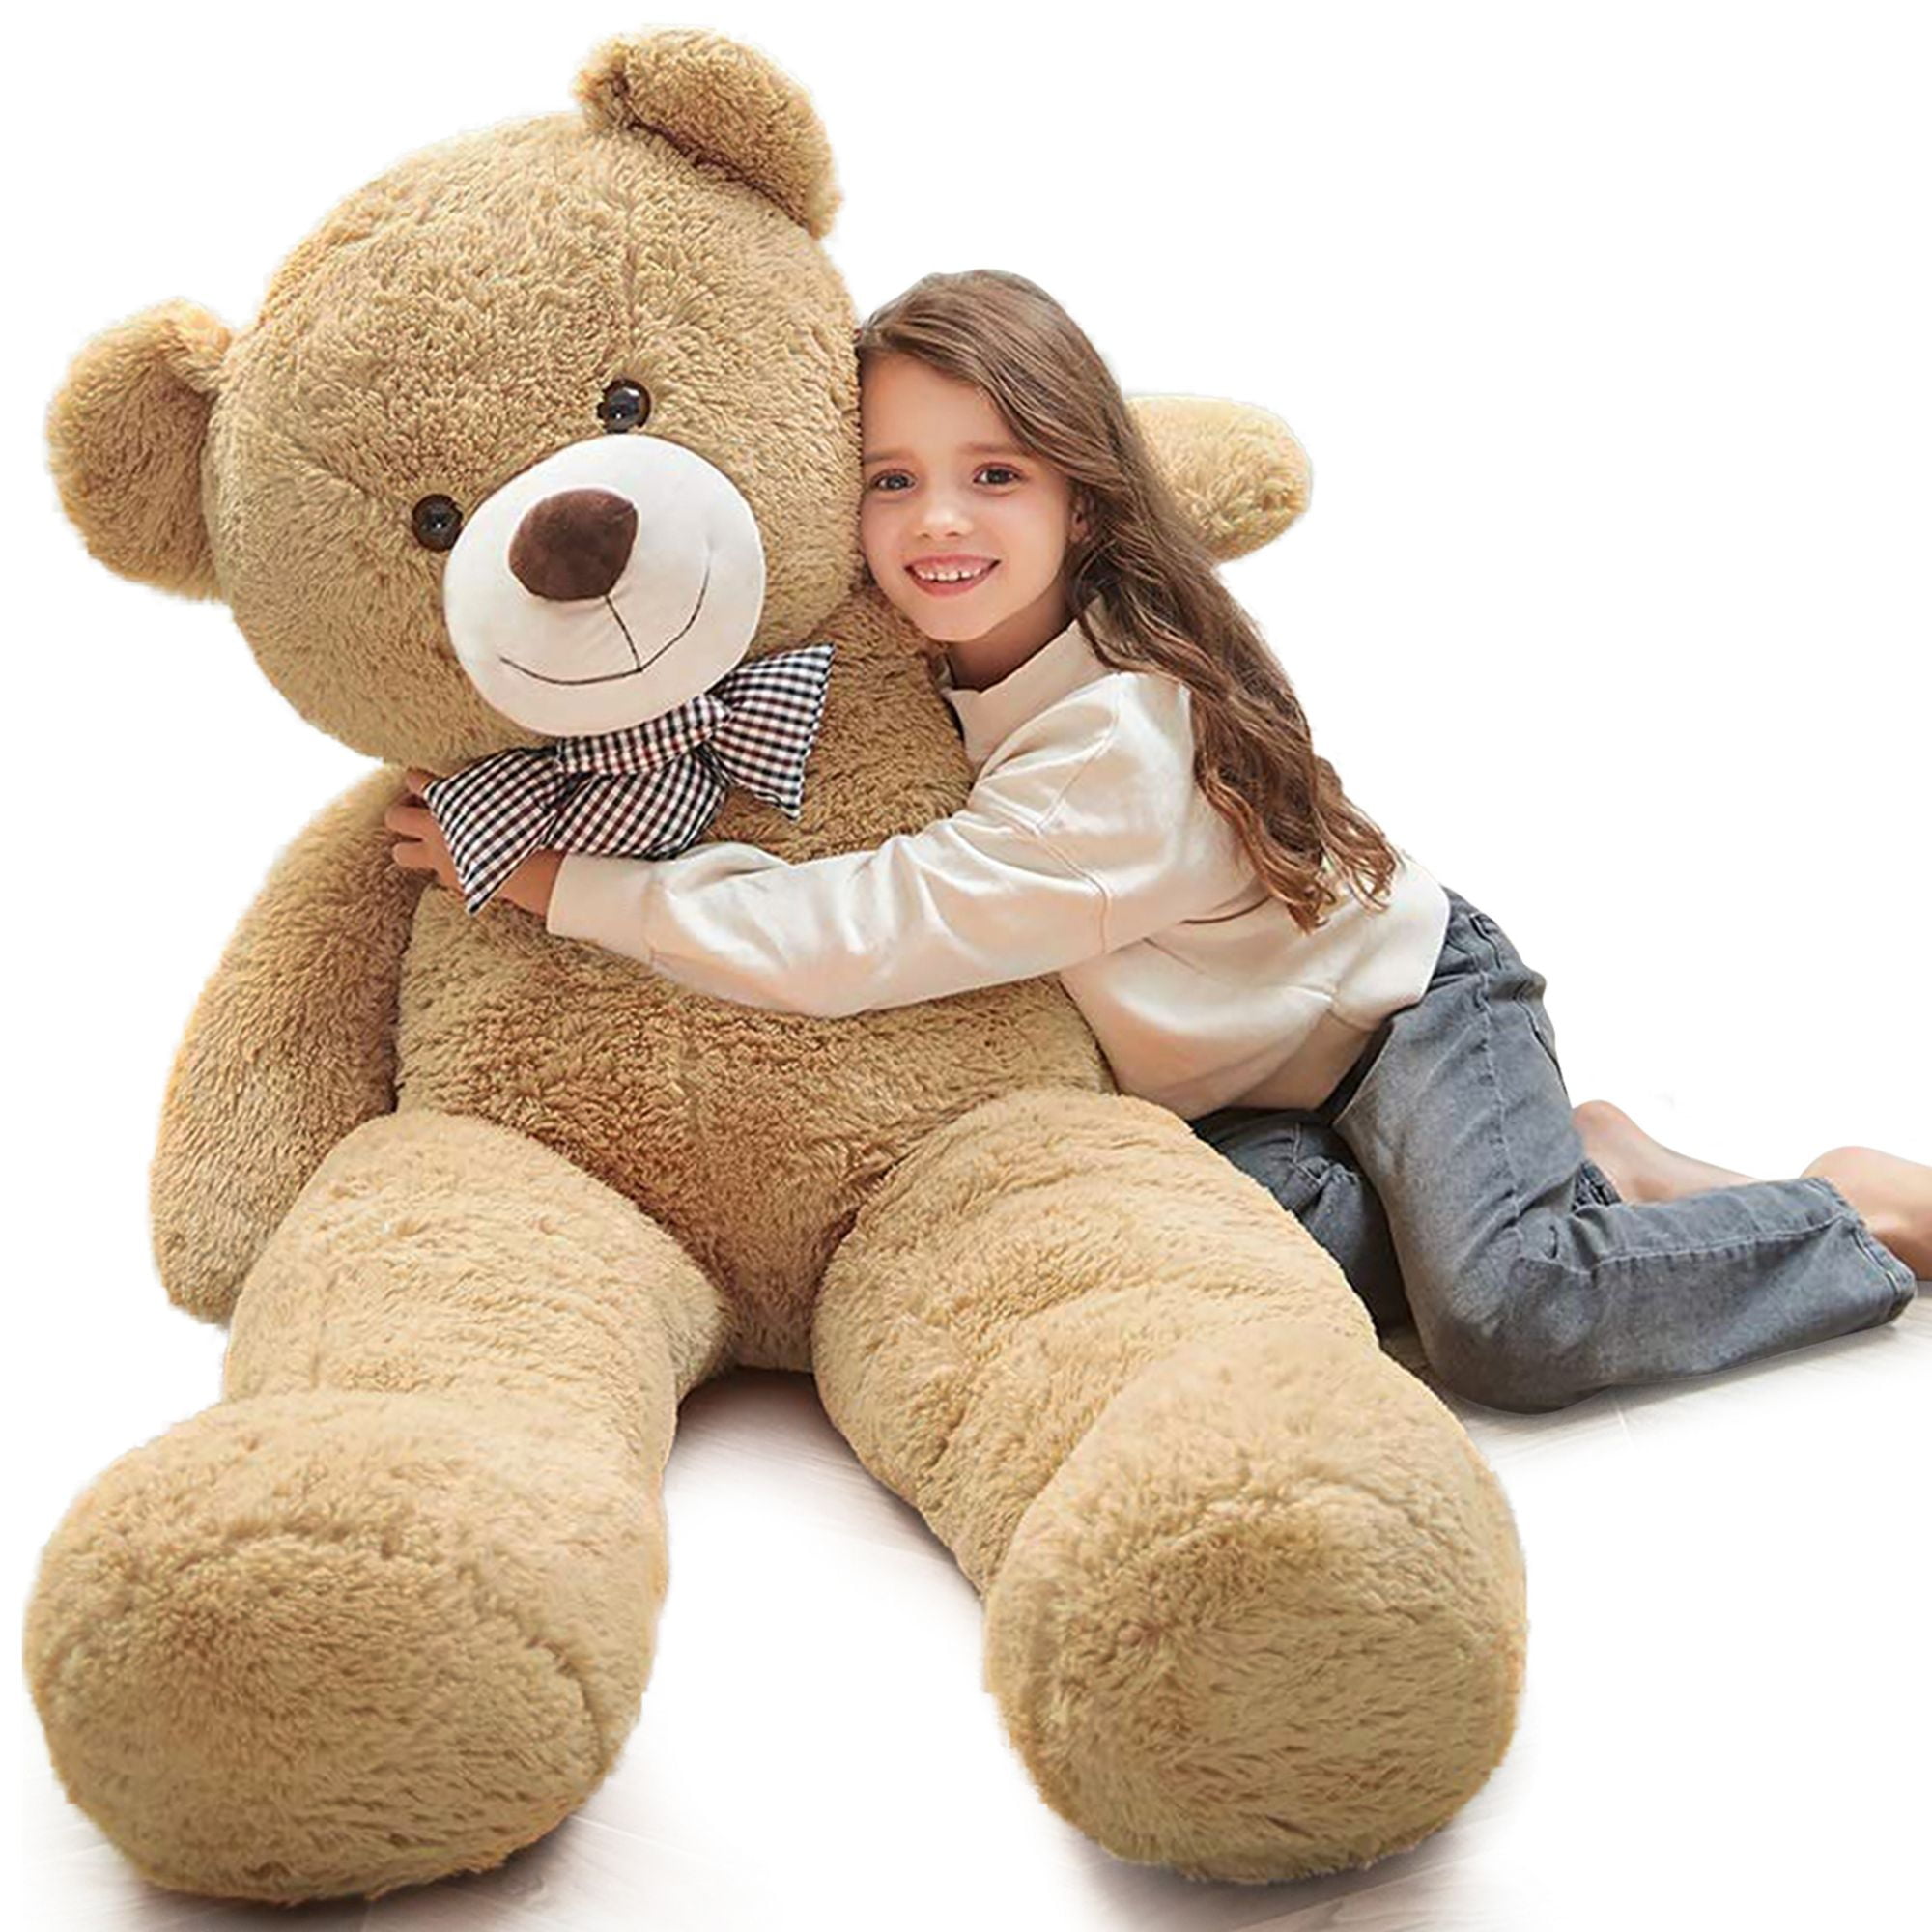 MorisMos Giant Teddy Bear 39.3'' Stuffed Animal Soft Big Bear Plush Toy 